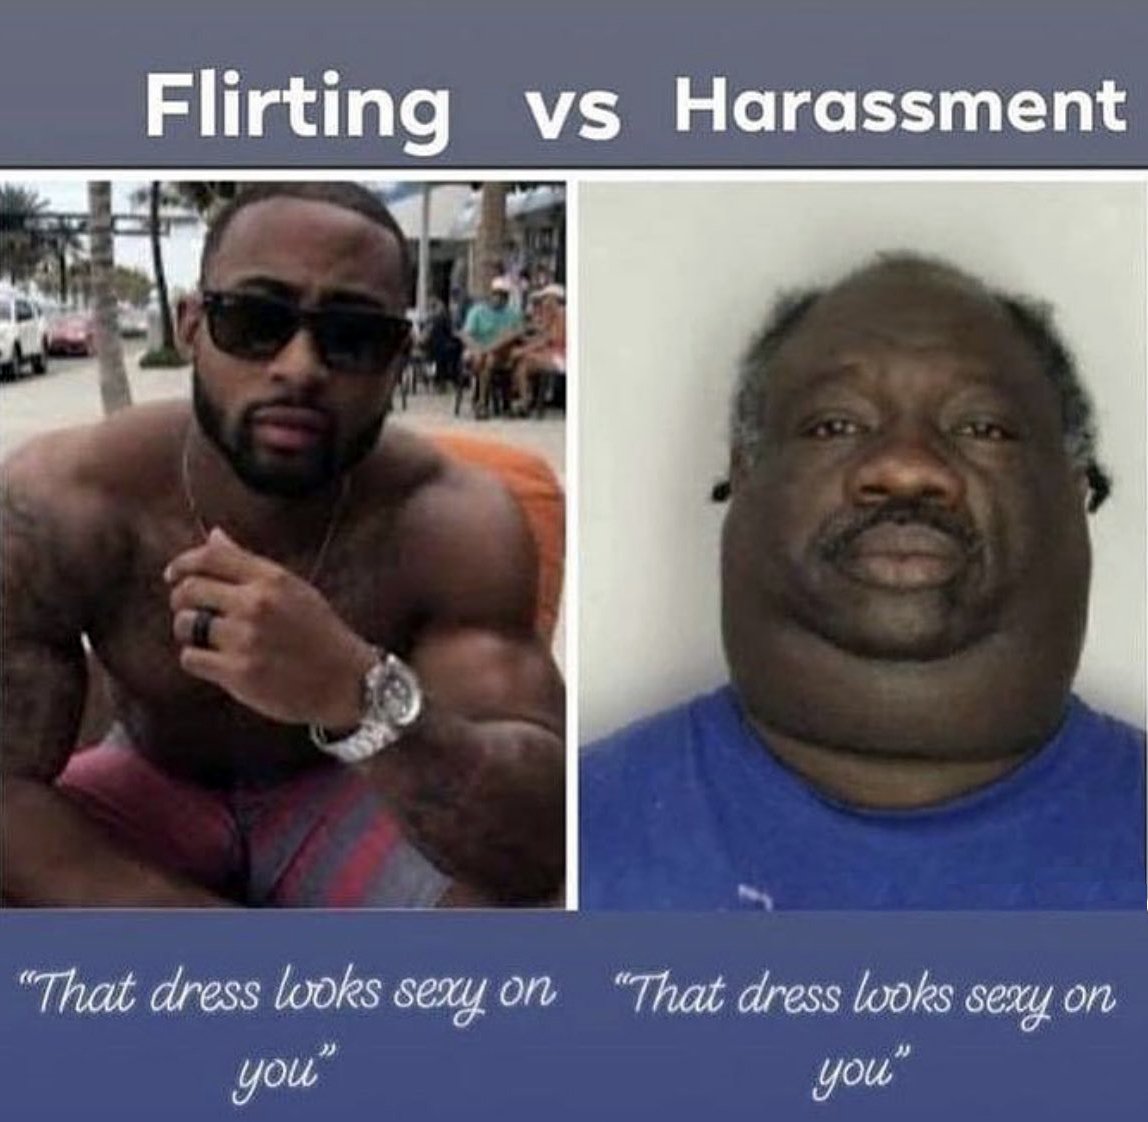 Difference between flirting & harrasment.

#WomanIsABurden 
#FalseCaseDay 
#8thMarchFalseRapeDay